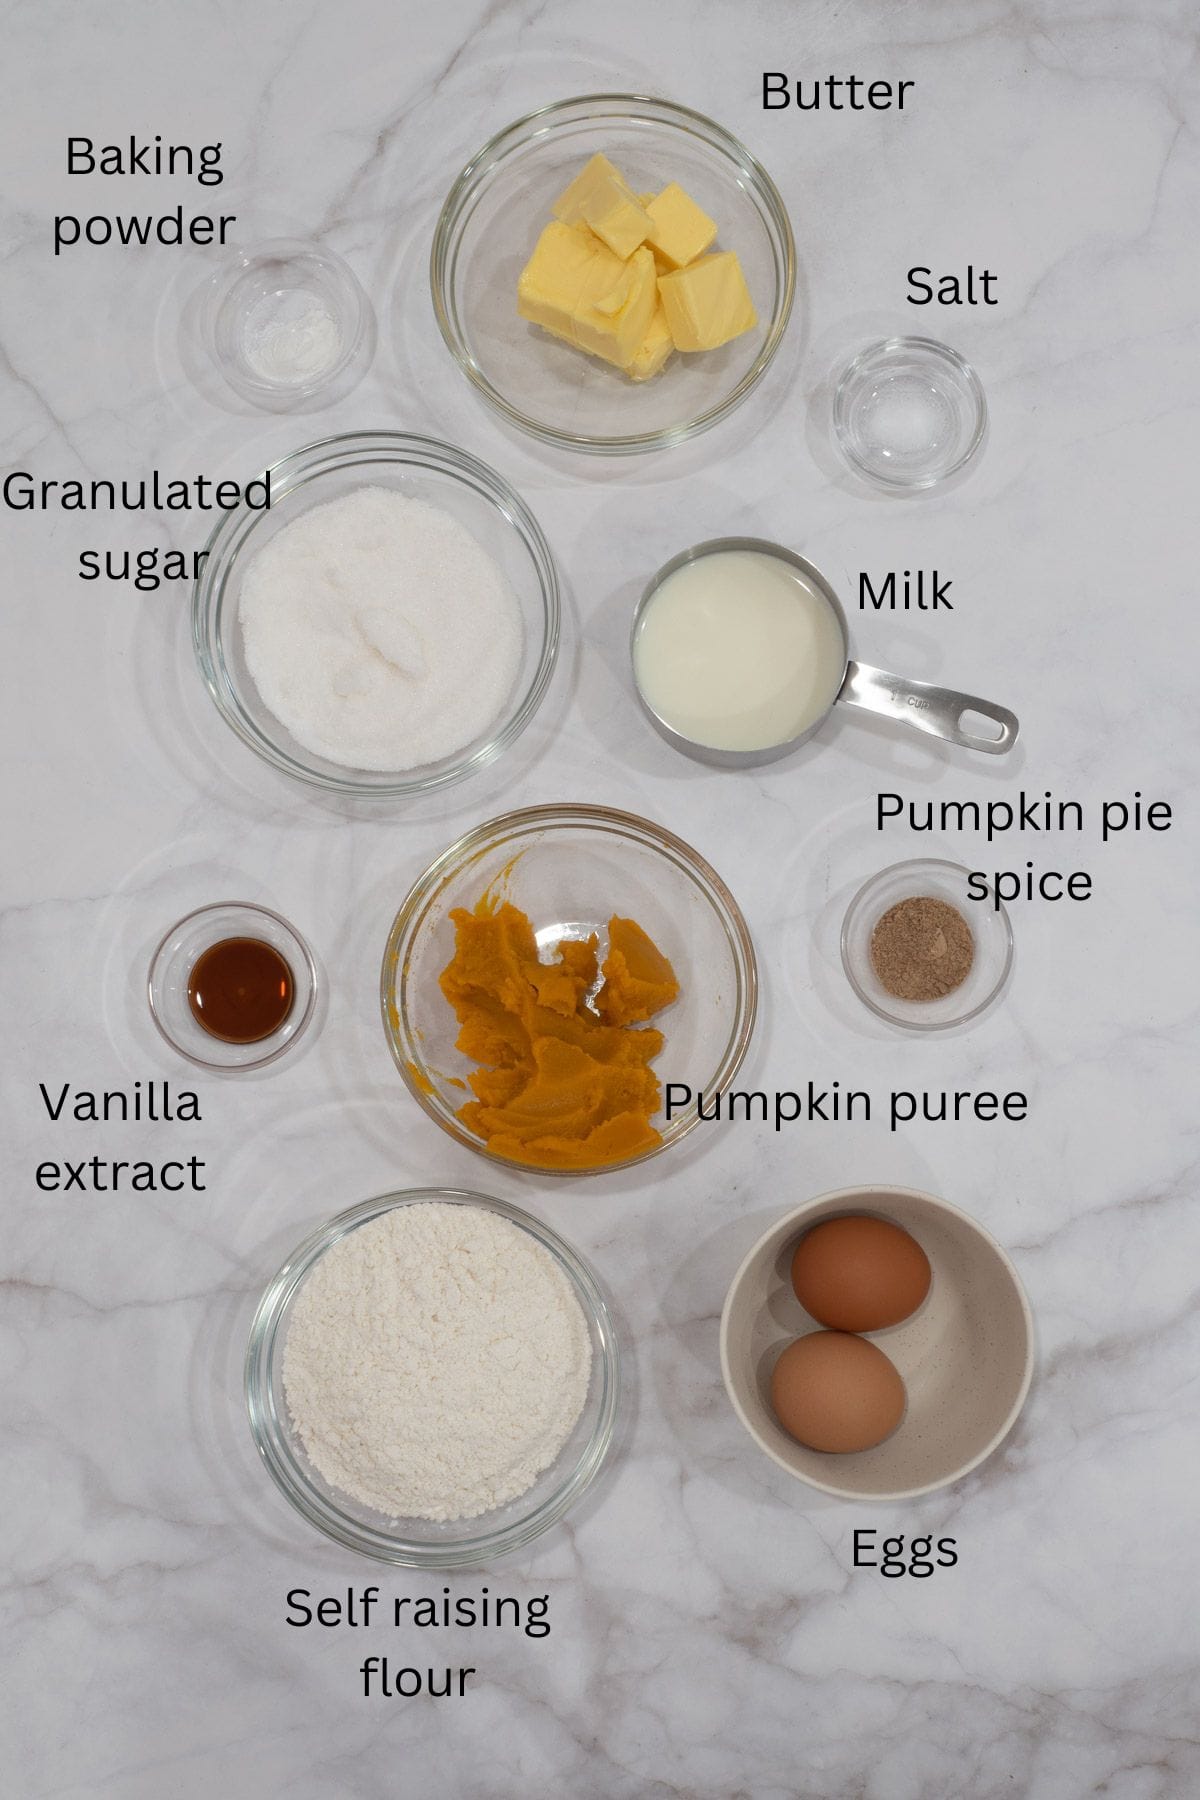 Self raising flour, granulated sugar, butter, eggs, pumpkin puree, pumpkin pie spice, vanilla extract, baking powder, salt and milk against a marble background.